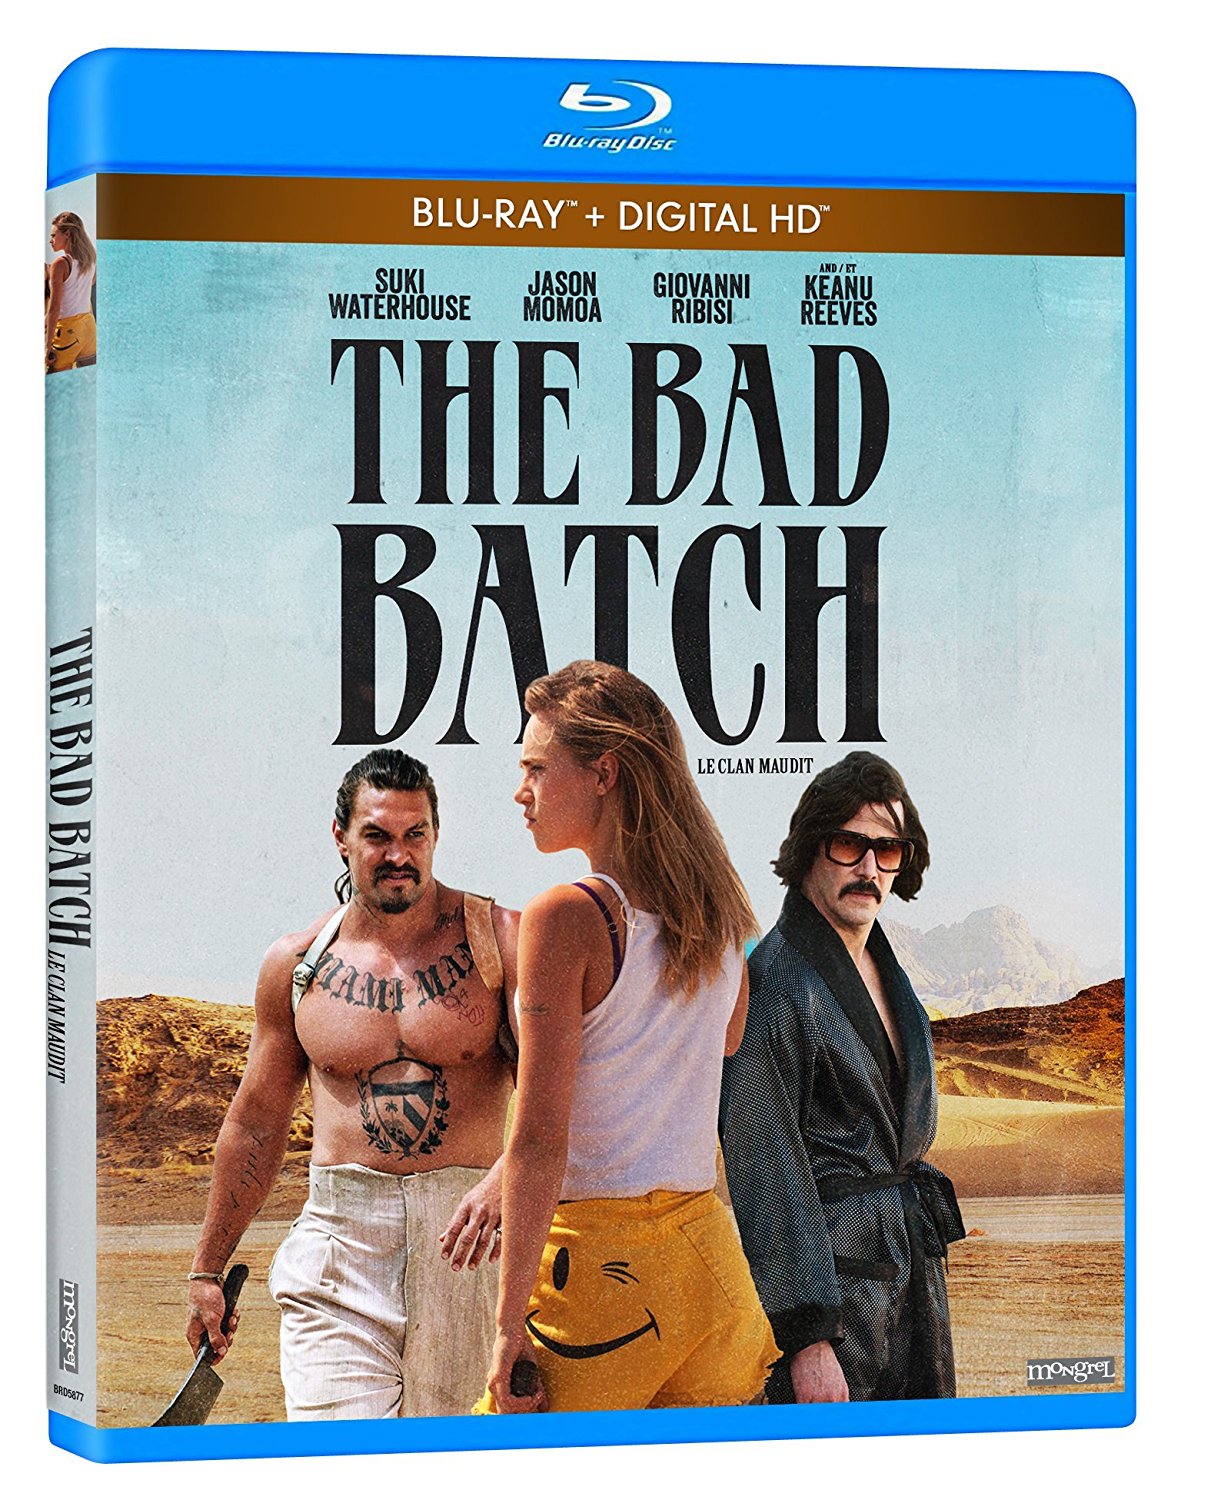 The Bad Batch on Blu-ray and Digital HD